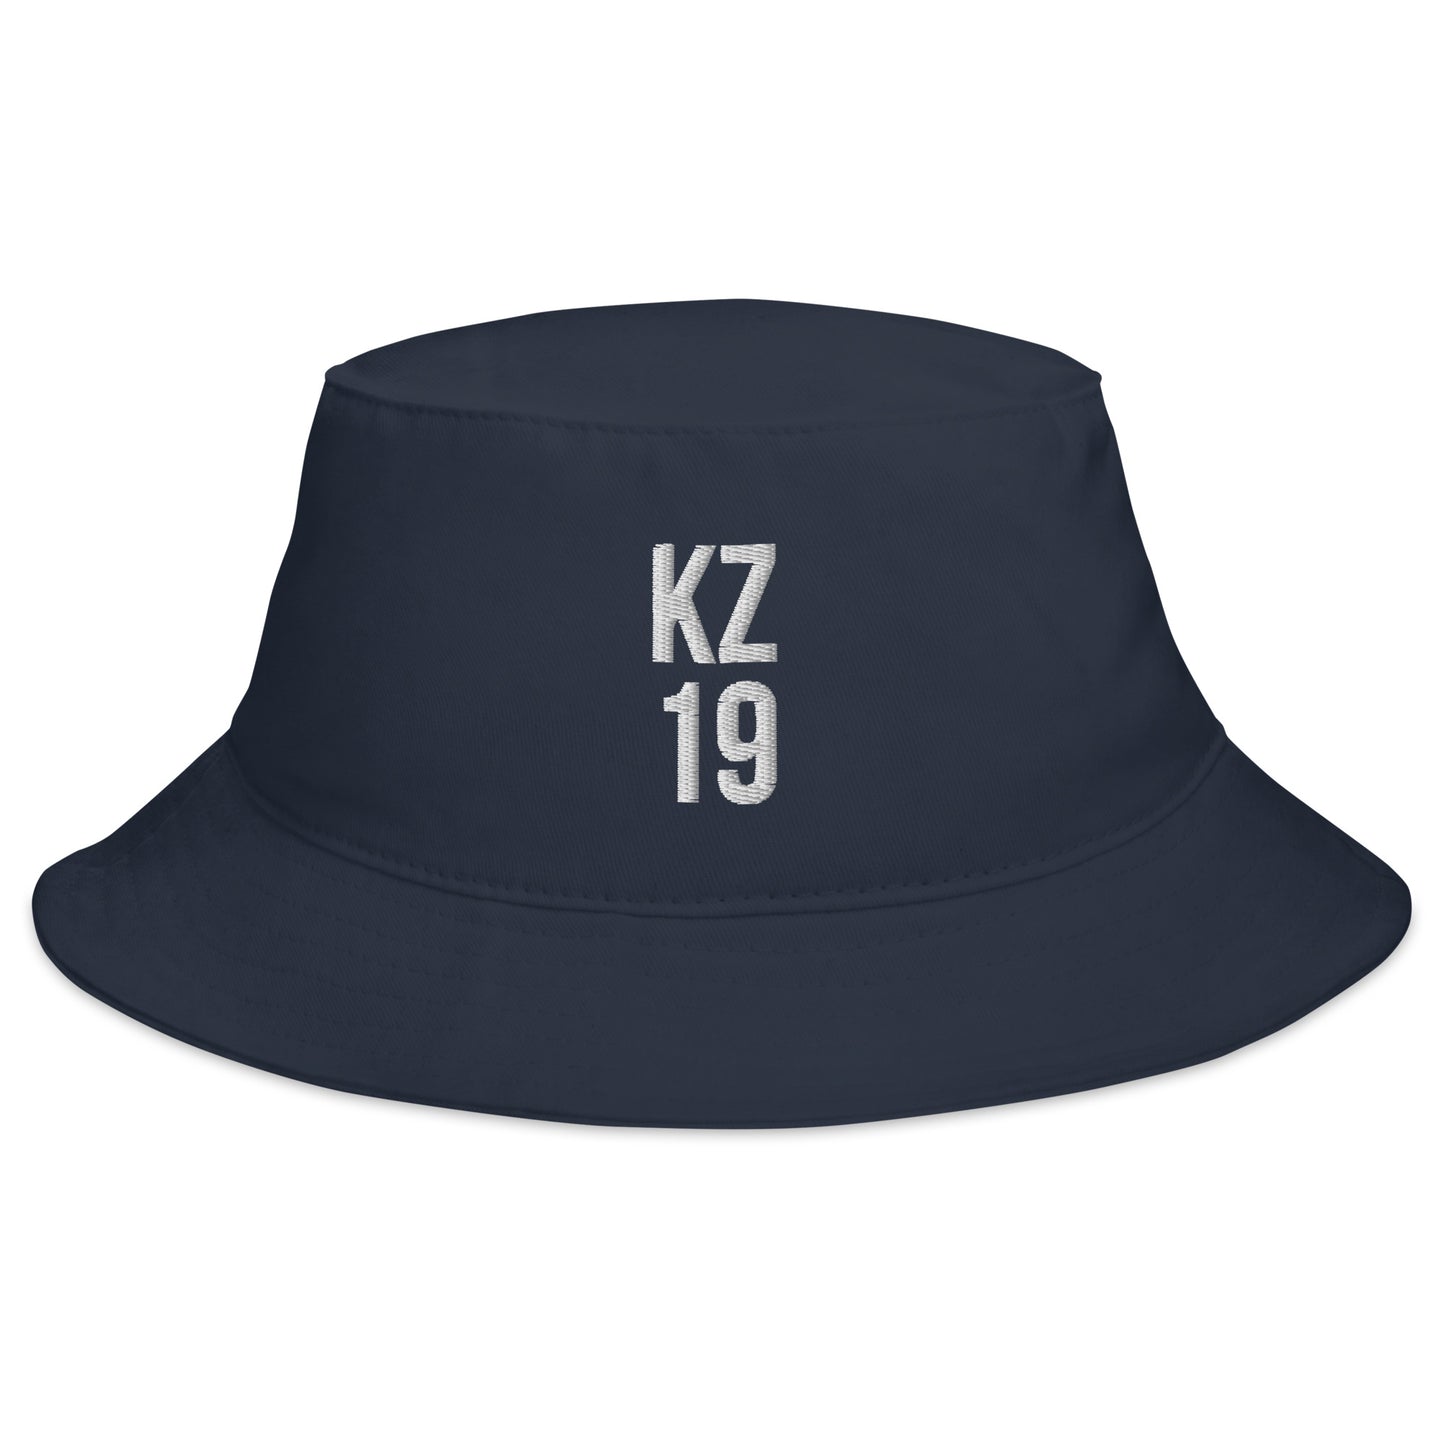 KZ 19 Bucket Hat